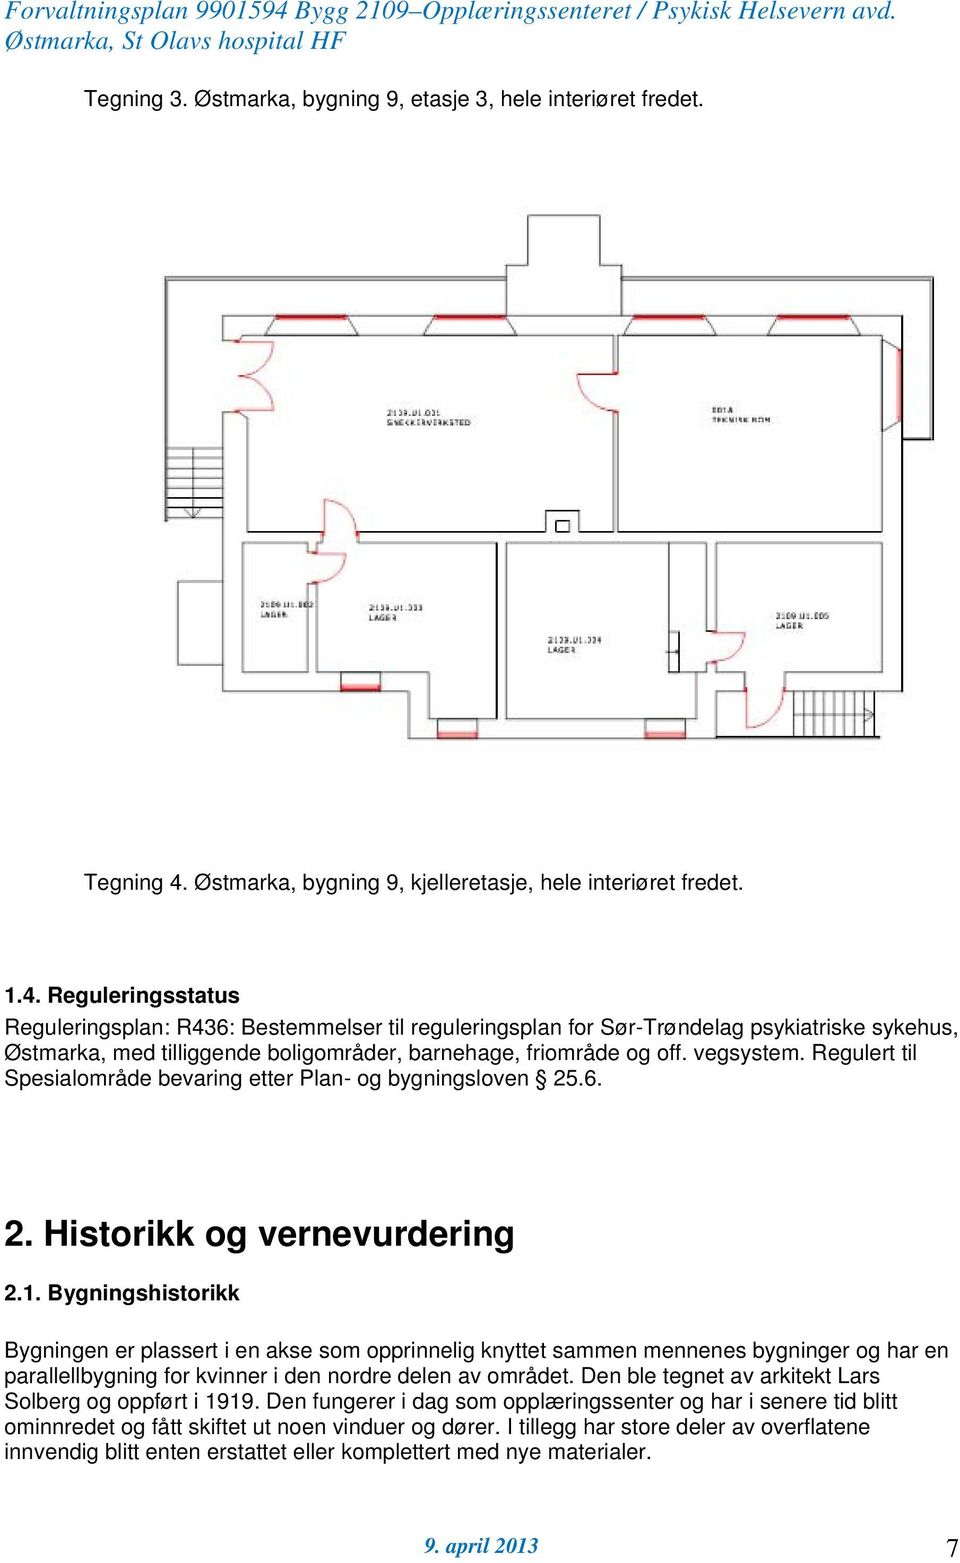 Reguleringsstatus Reguleringsplan: R436: Bestemmelser til reguleringsplan for Sør-Trøndelag psykiatriske sykehus, Østmarka, med tilliggende boligområder, barnehage, friområde og off. vegsystem.